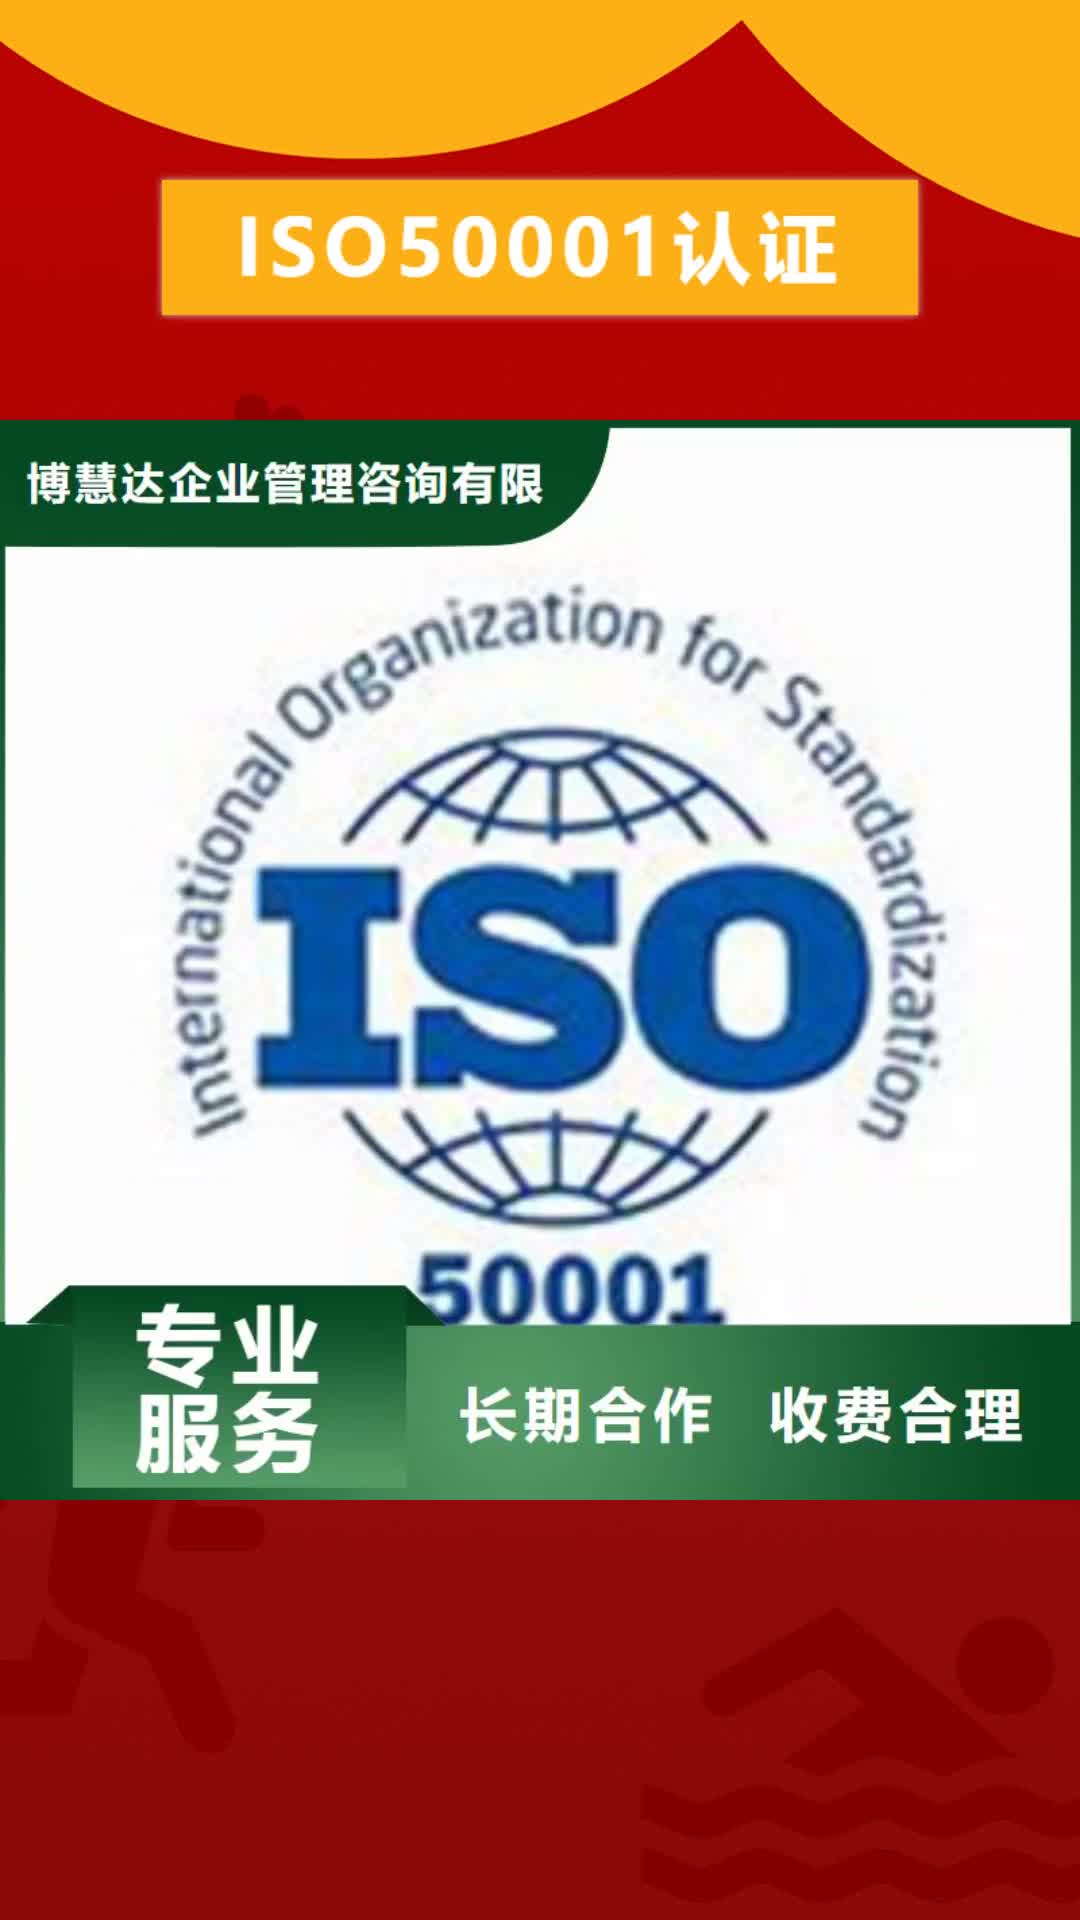 河源【ISO50001认证】 ISO9001\ISO9000\ISO14001认证专业服务